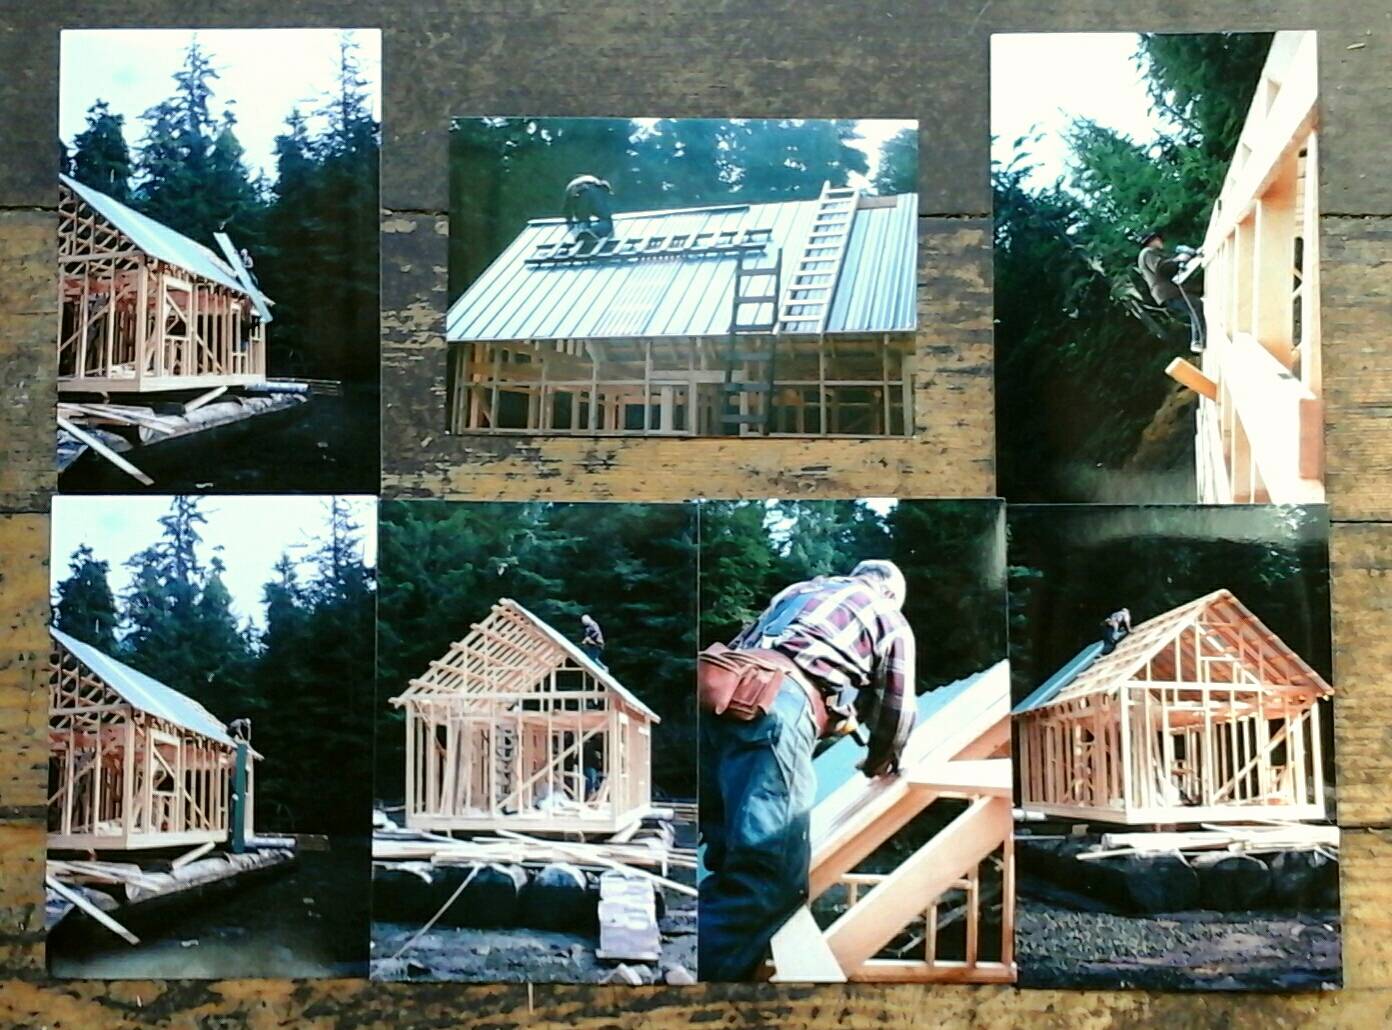 Building a floathouse